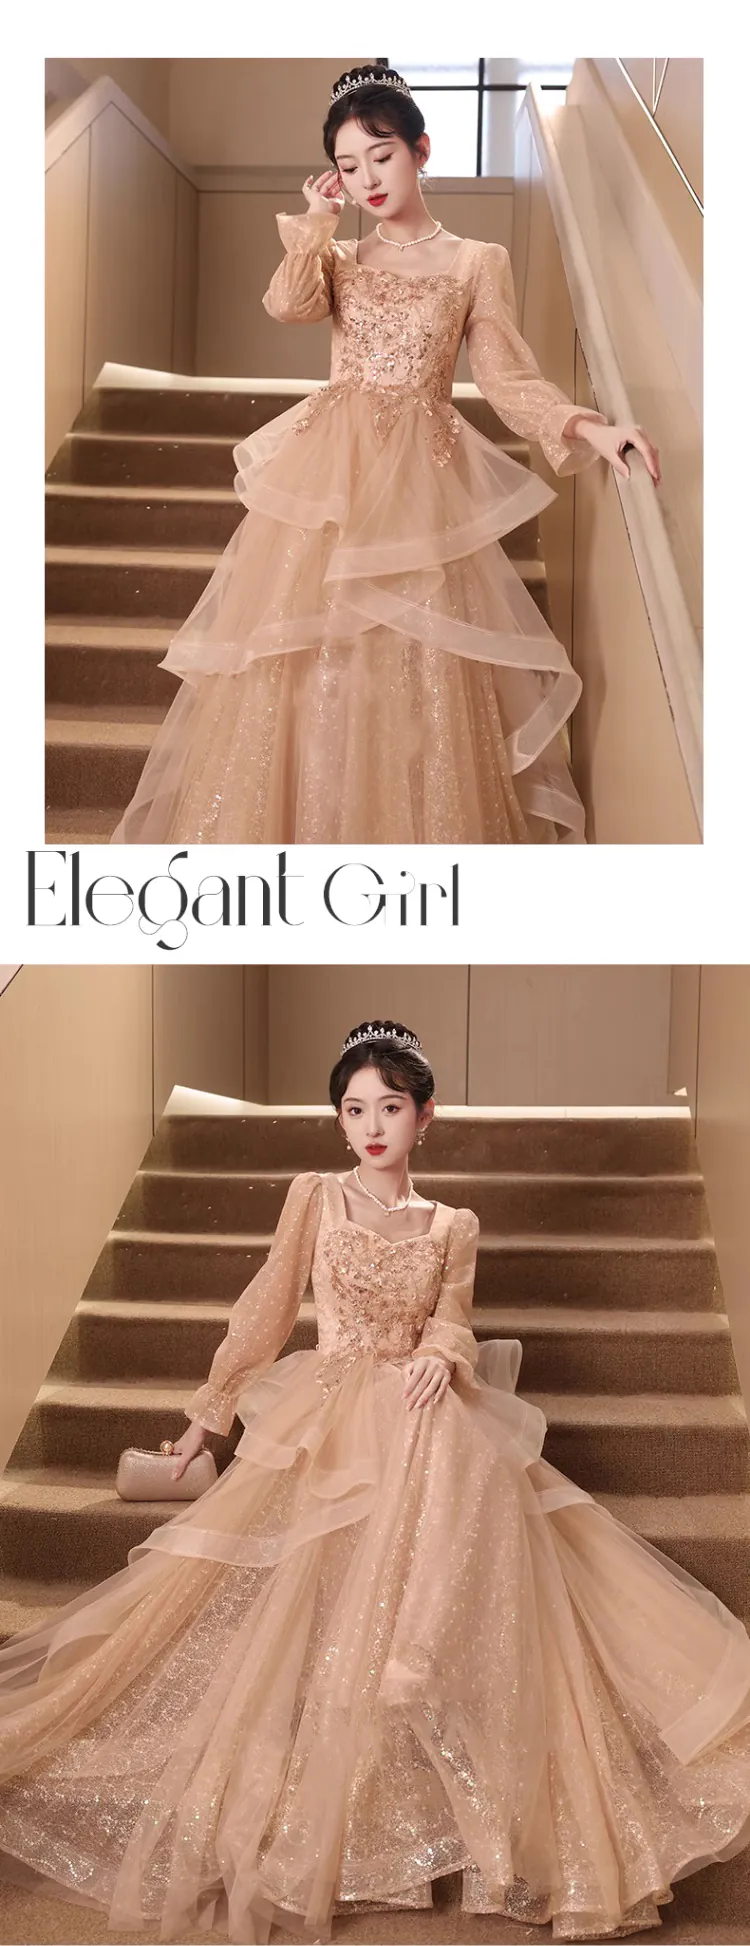 Classy-Elegant-Khaki-Long-Sleeve-Formal-Party-Dress-Aesthetic-Ball-Gown11